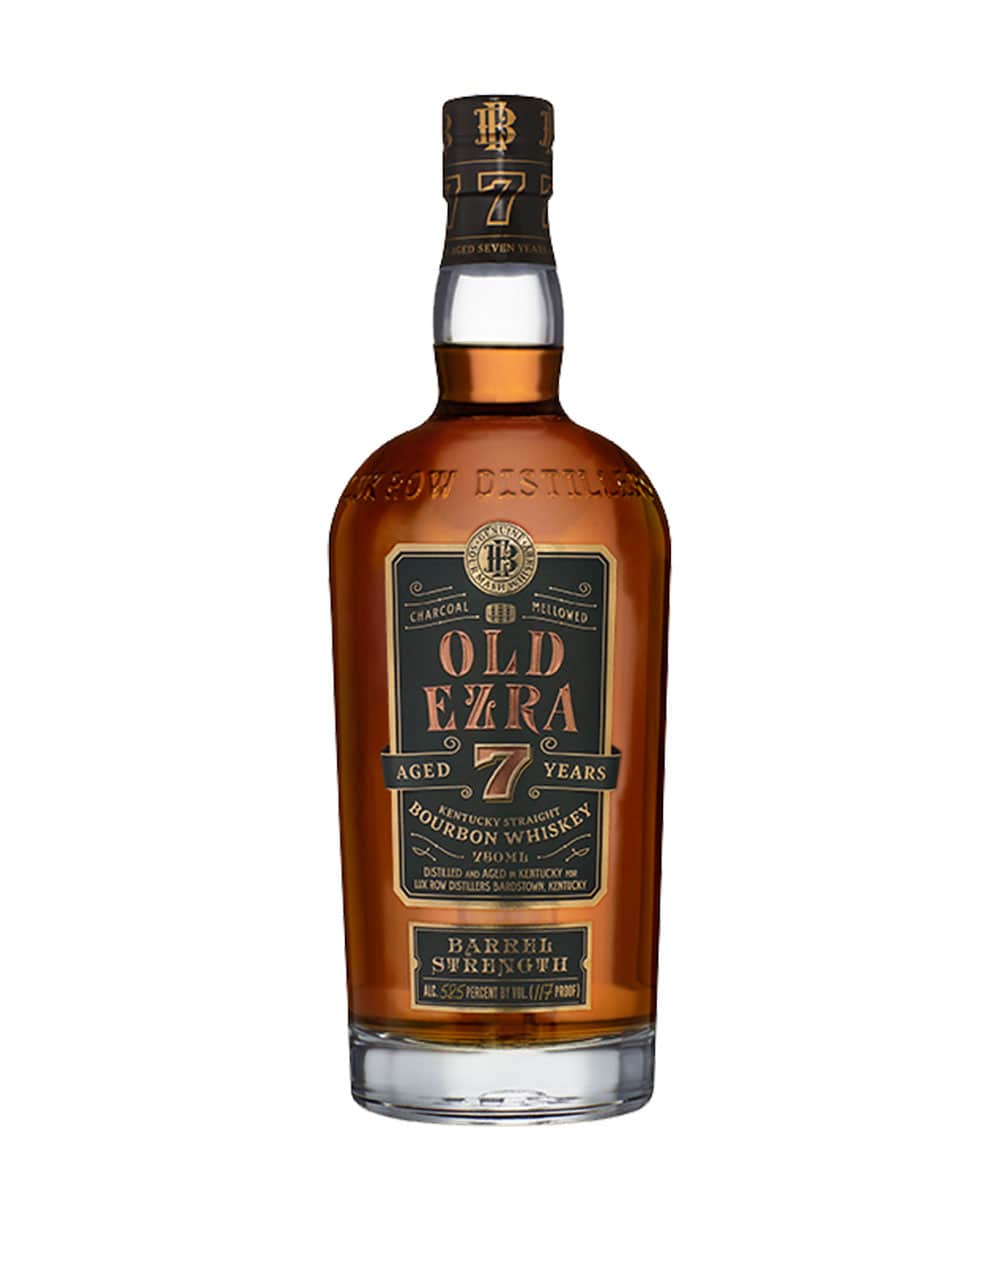 Old Ezra Barrel Strength 7 Year old Bourbon Whiskey